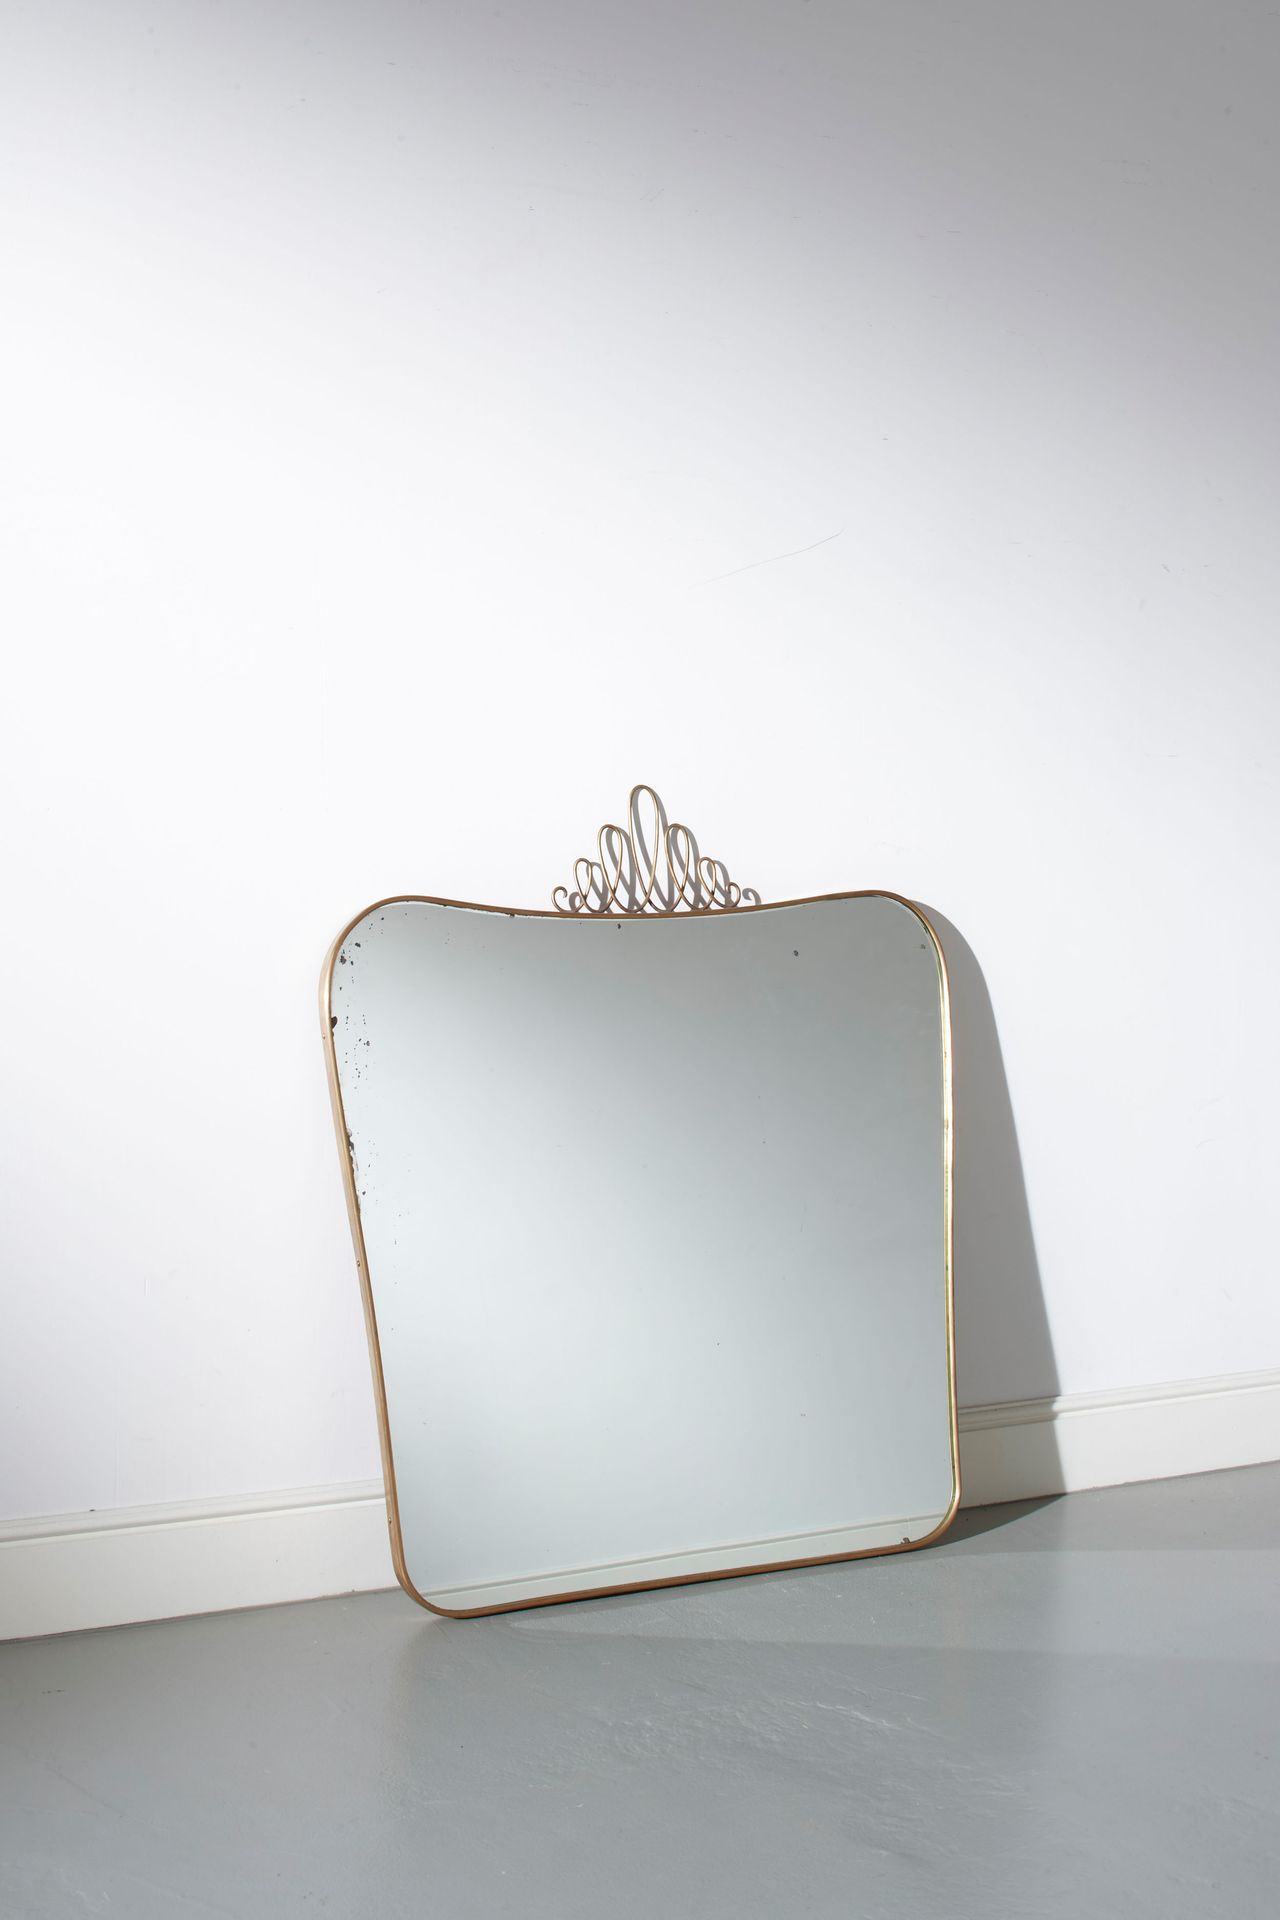 Manifattura Italiana 镜子。黄铜，镜面水晶。意大利 1950年代。
cm 92x80x3
AN ITALIAN MIRROR



整体状况&hellip;